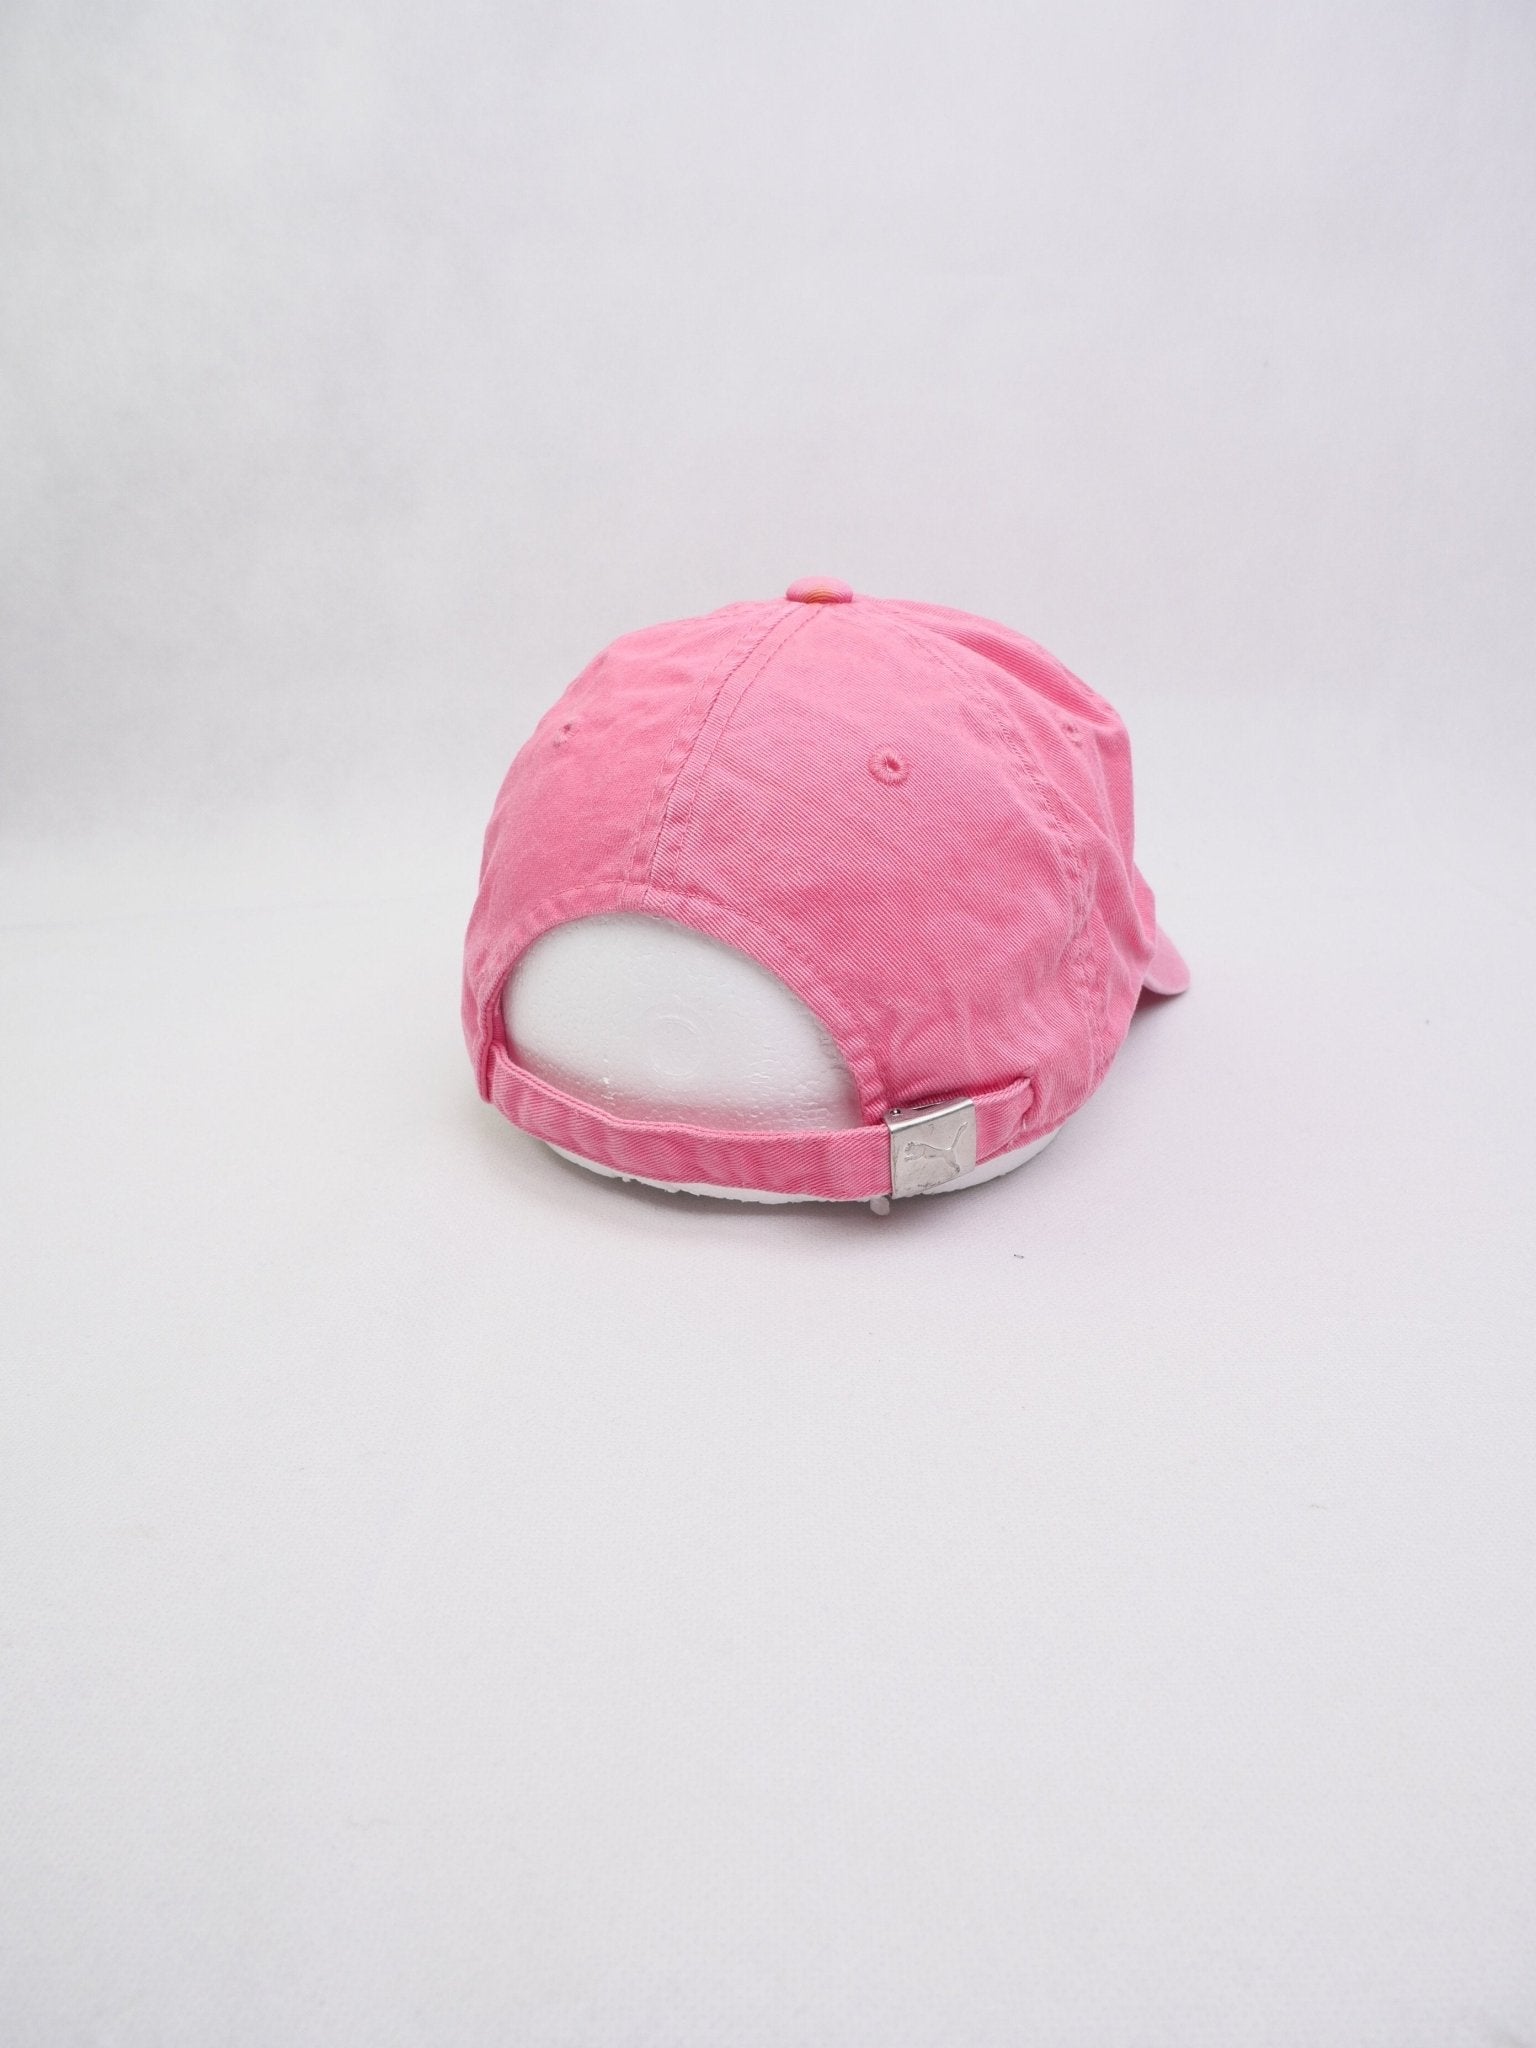 puma embroidered Logo pink Cap Accessoire - Peeces